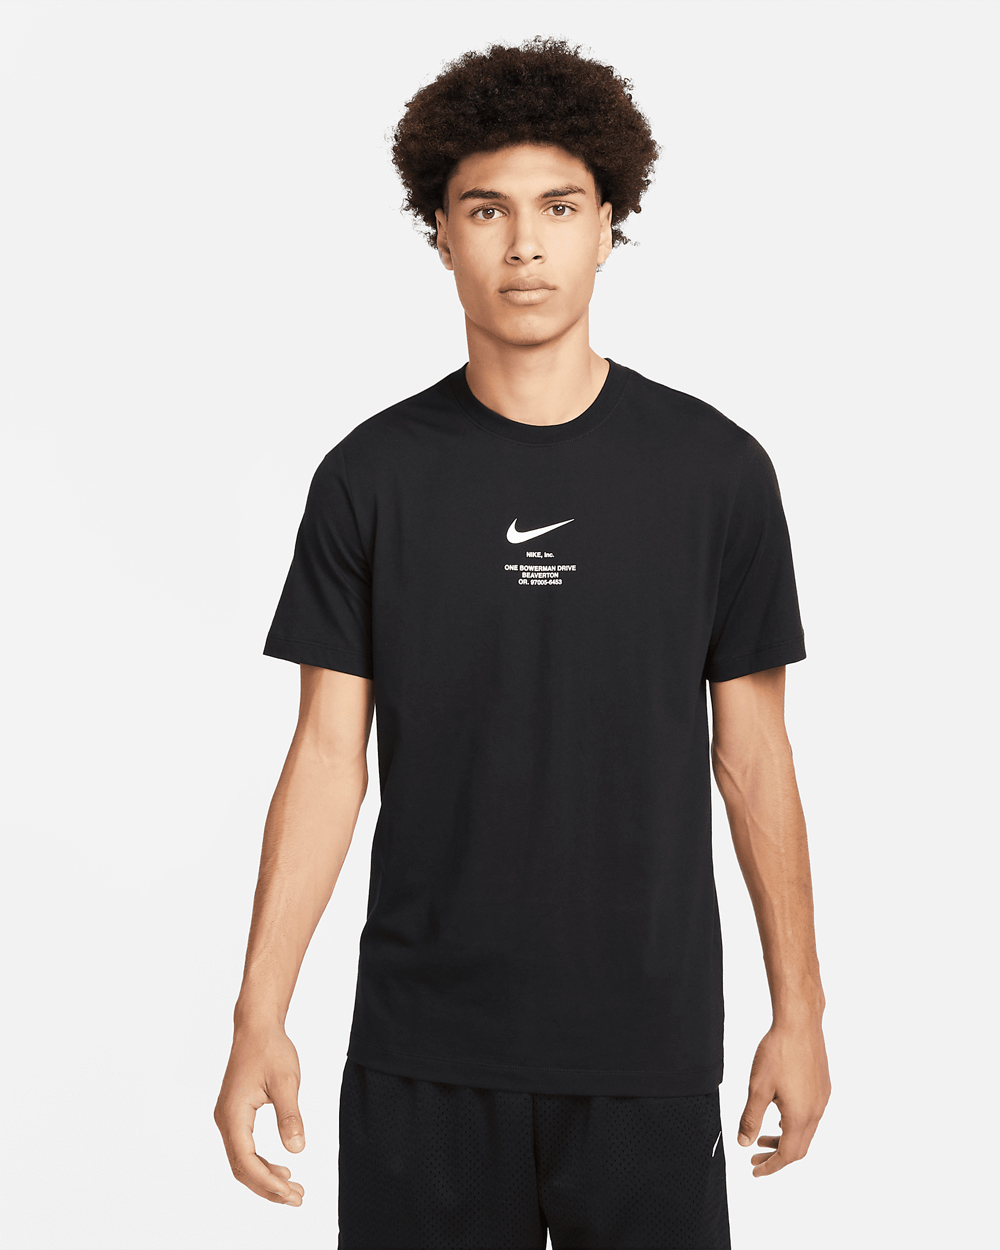 Nike-Sportswear-T-Shirt-Black-White-1